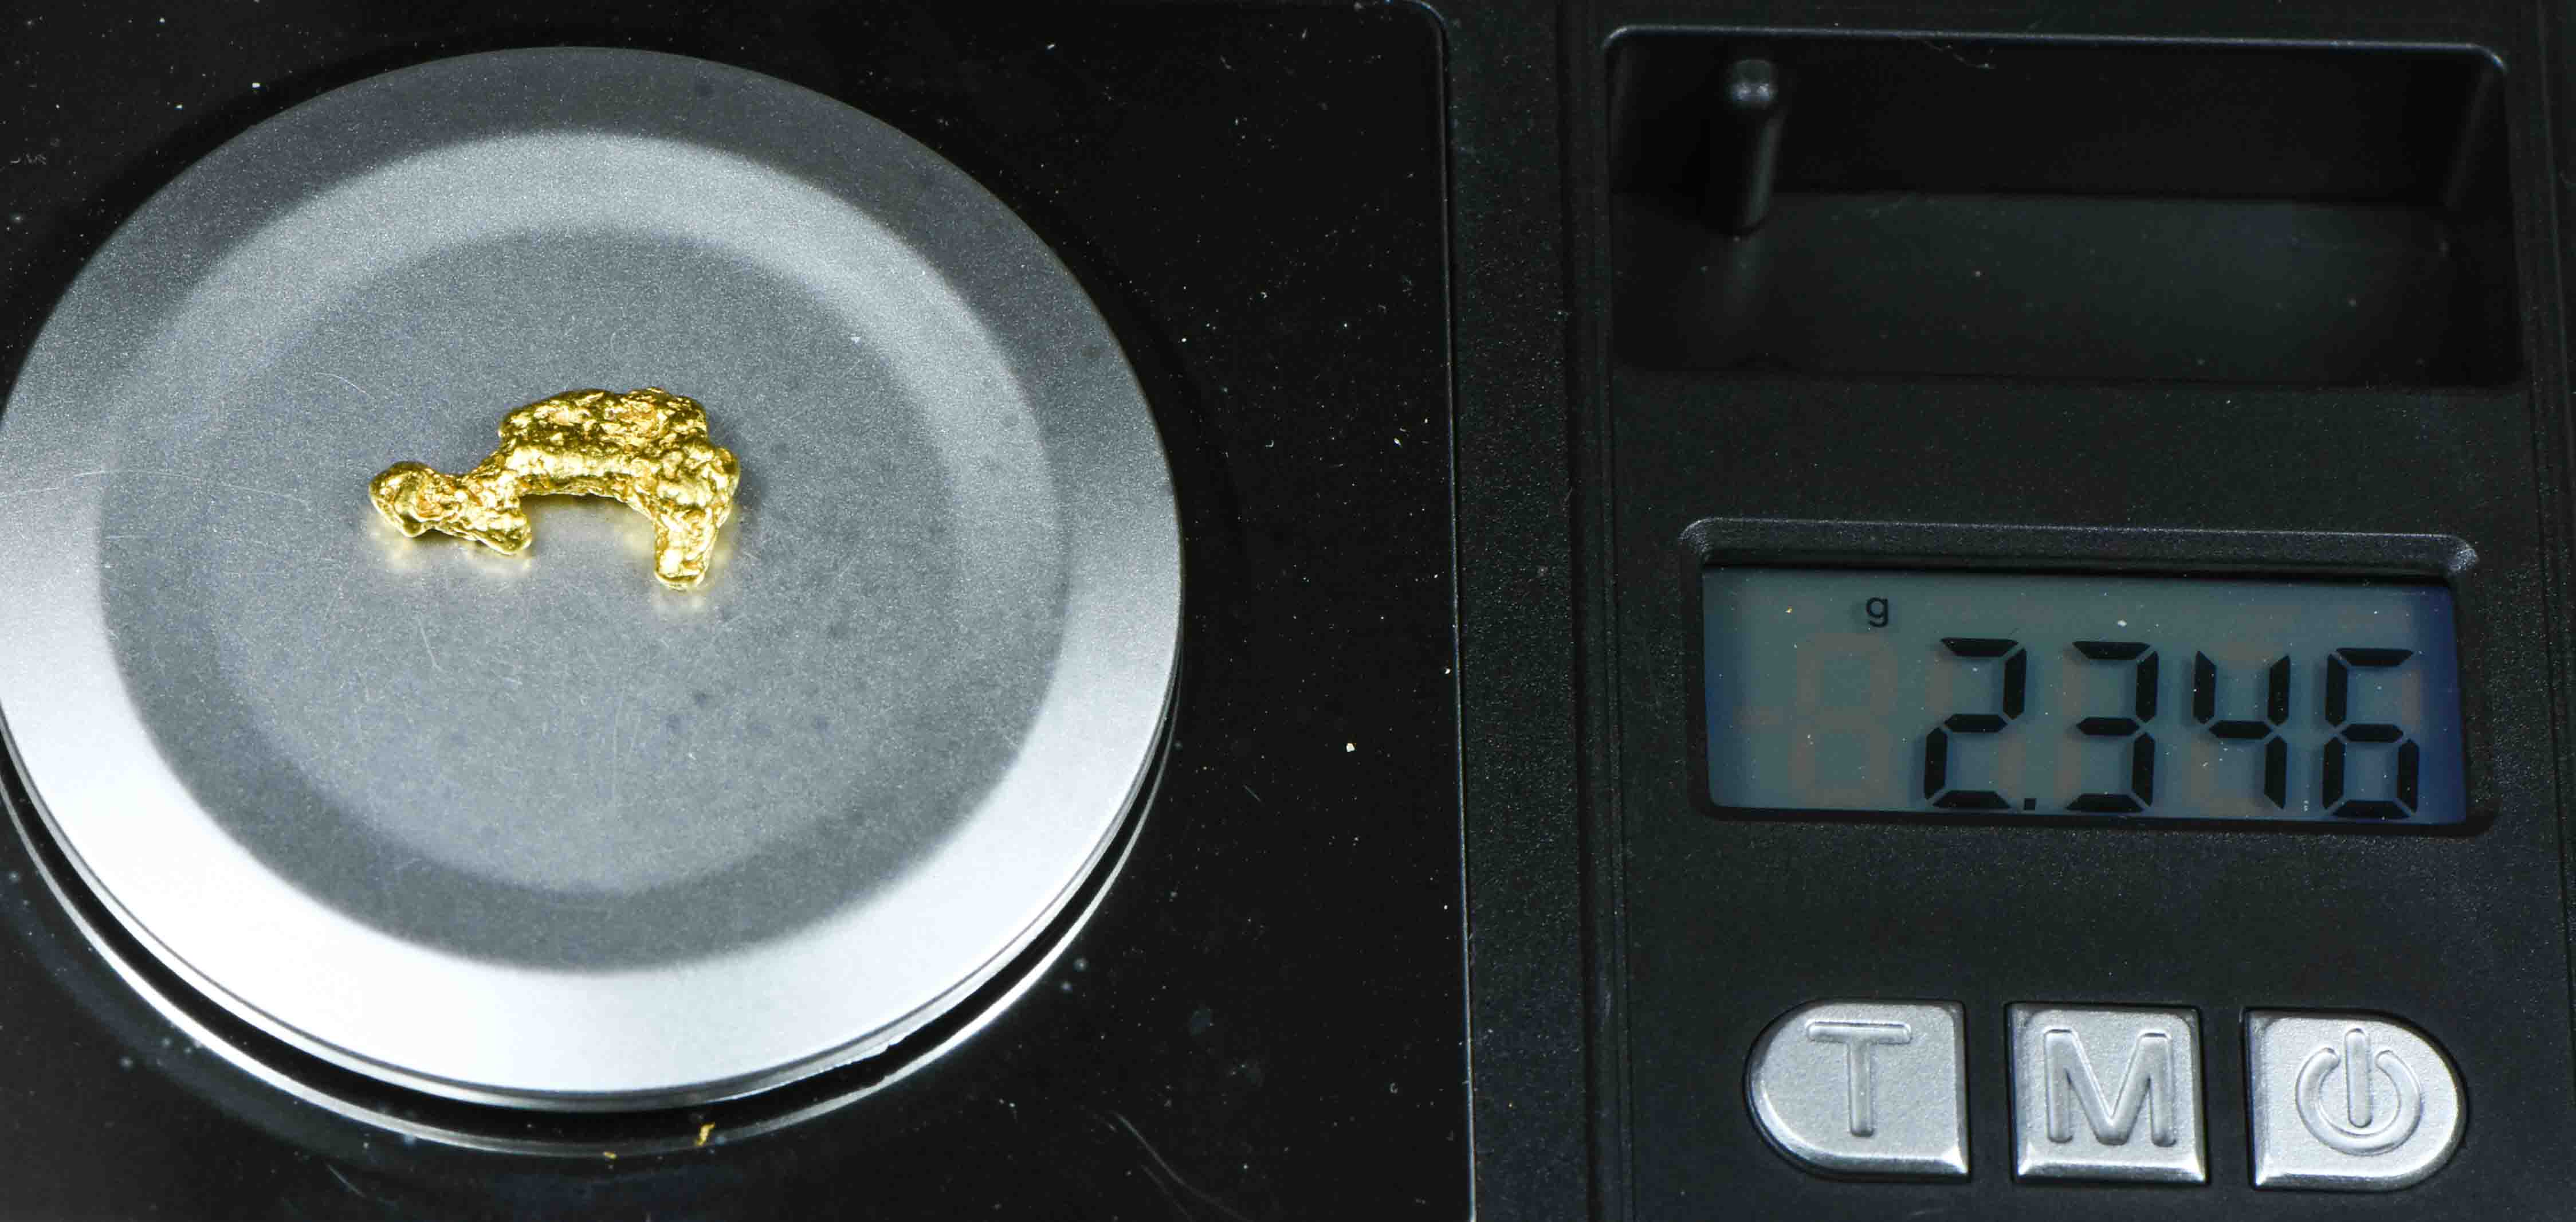 #62 Natural Gold Nugget Montana 2.34 Grams Genuine